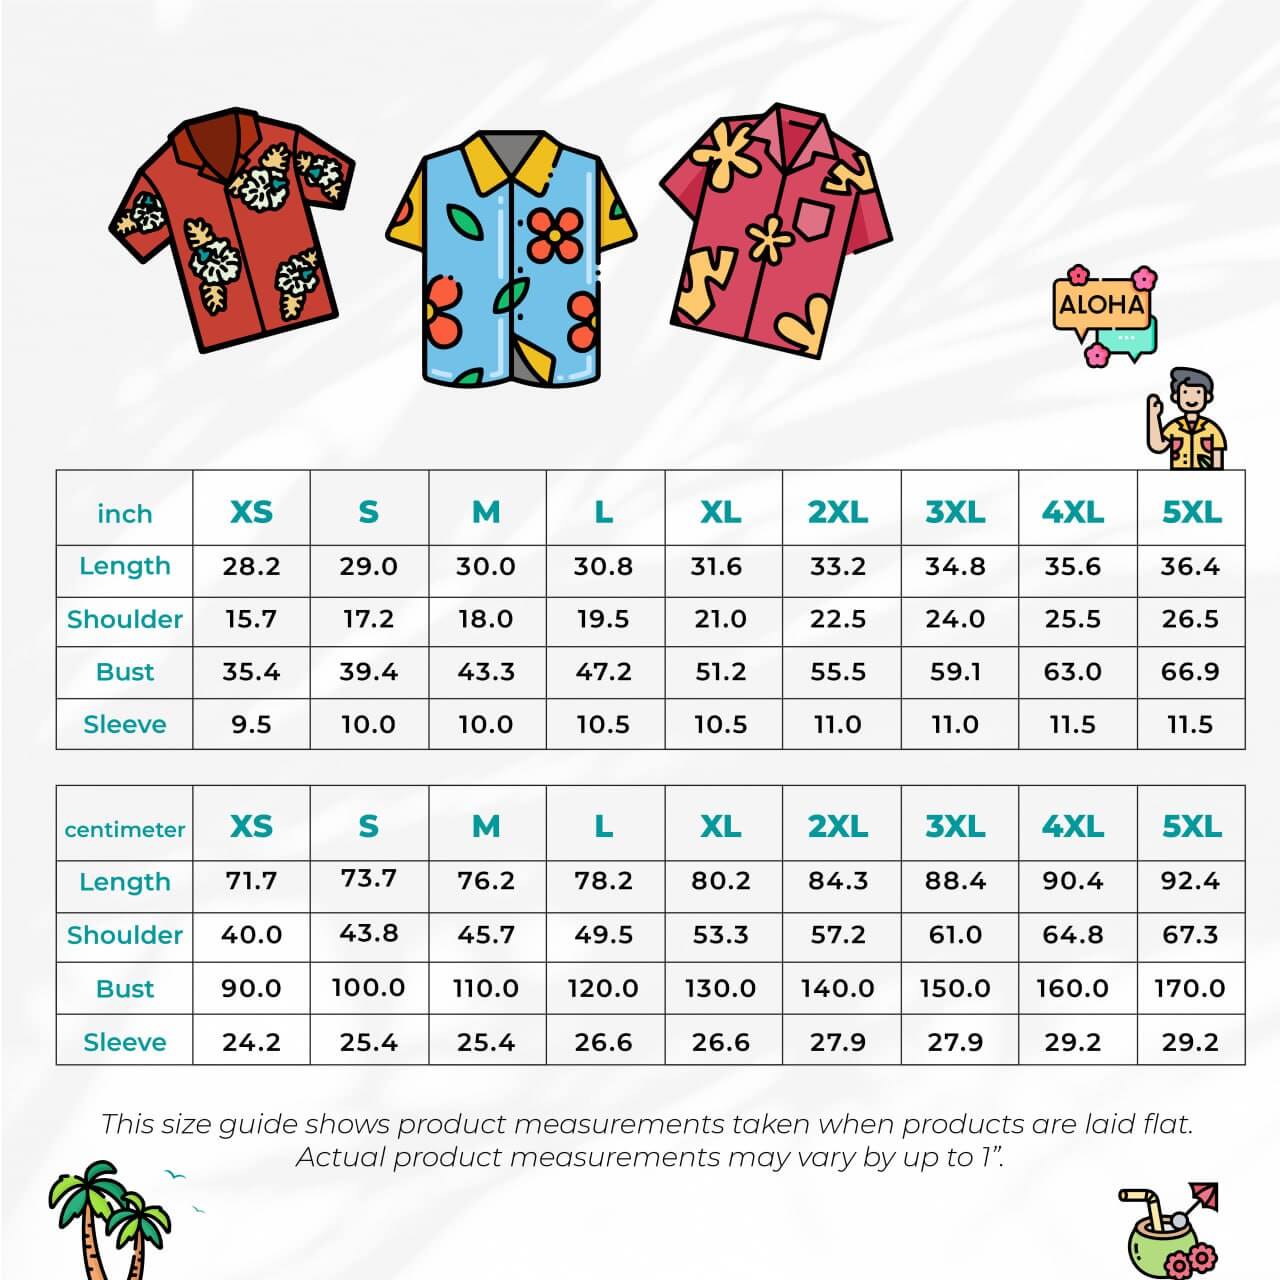 Astros Hawaiian Shirt Houston Astros Space City Custom Hawaiian Shirts -  Upfamilie Gifts Store